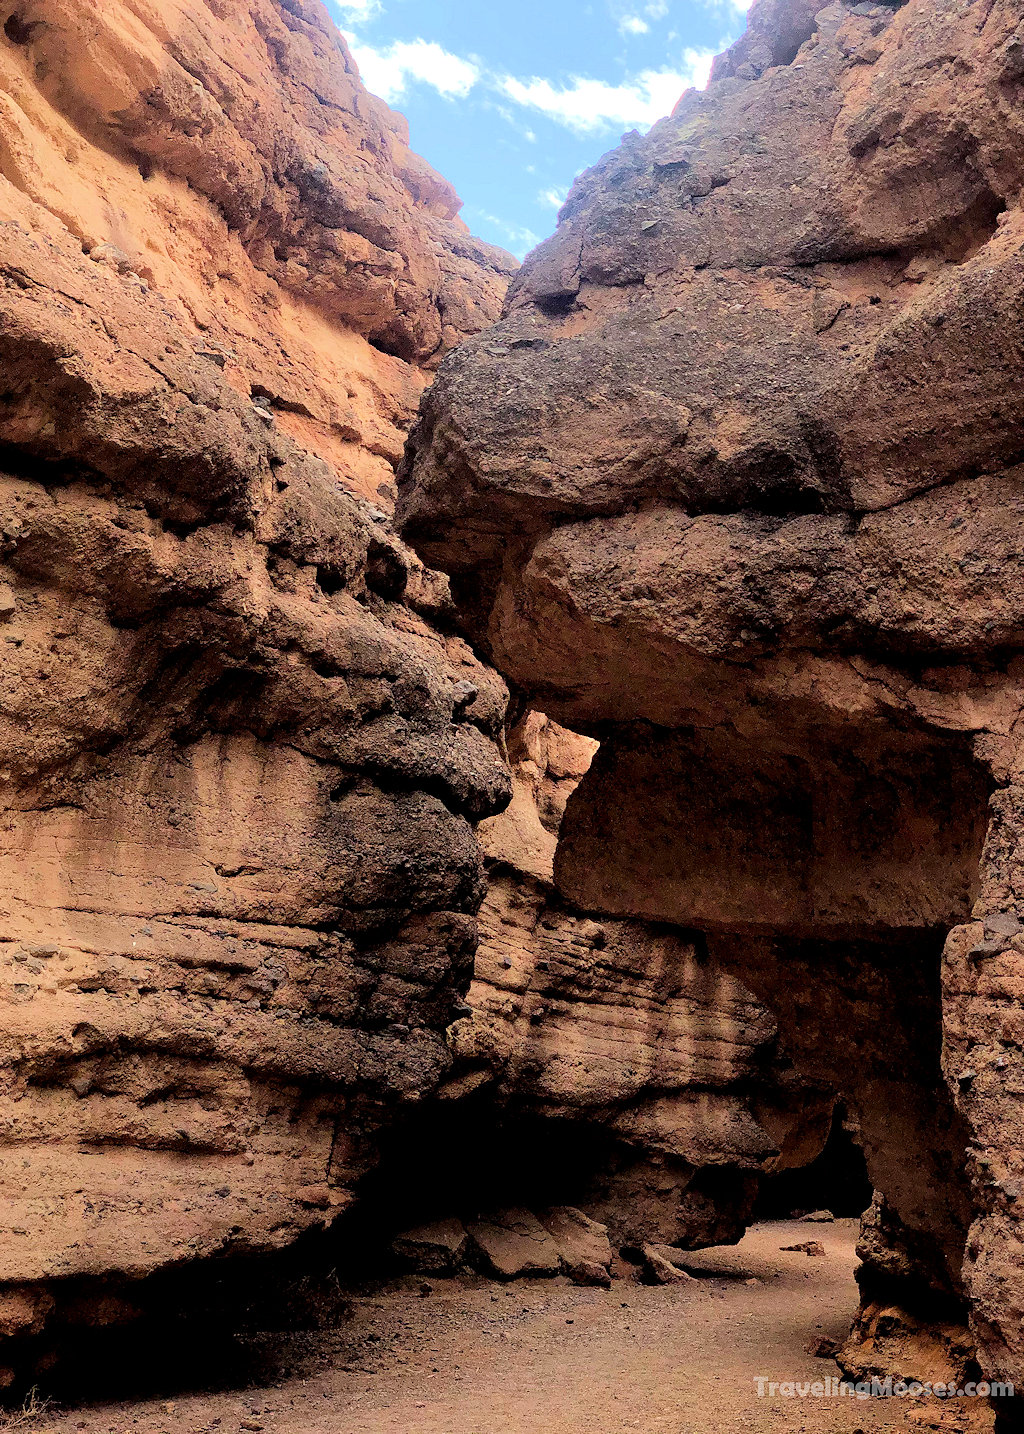 Slot canyon with walls 20 feet tall